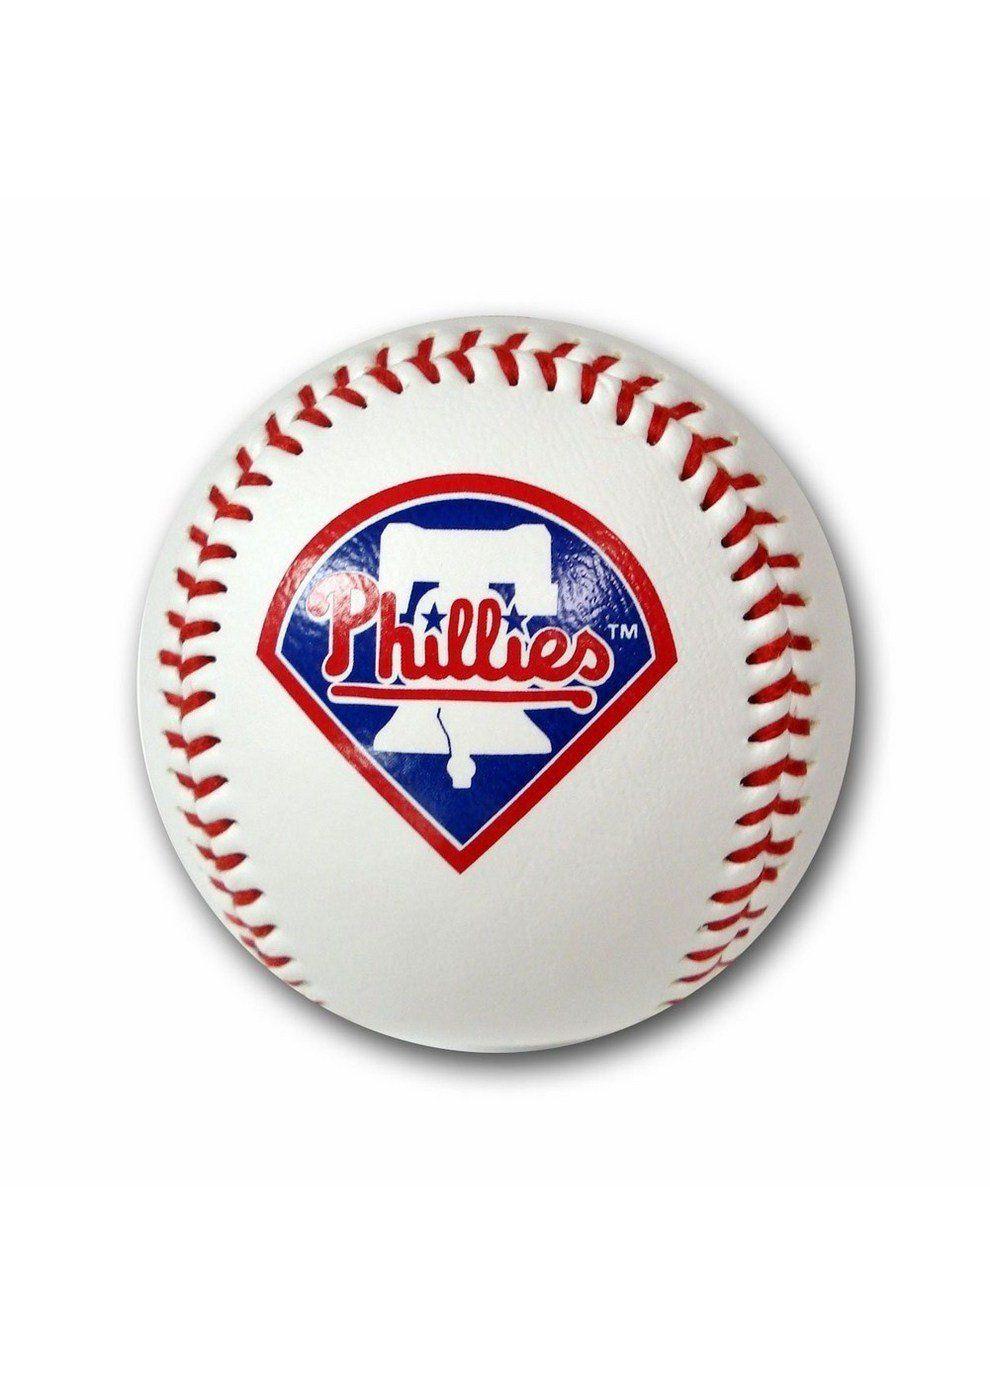 Phillies Baseball Logo - Amazon.com : MLB Philadelphia Phillies Baseball with Team Logo ...